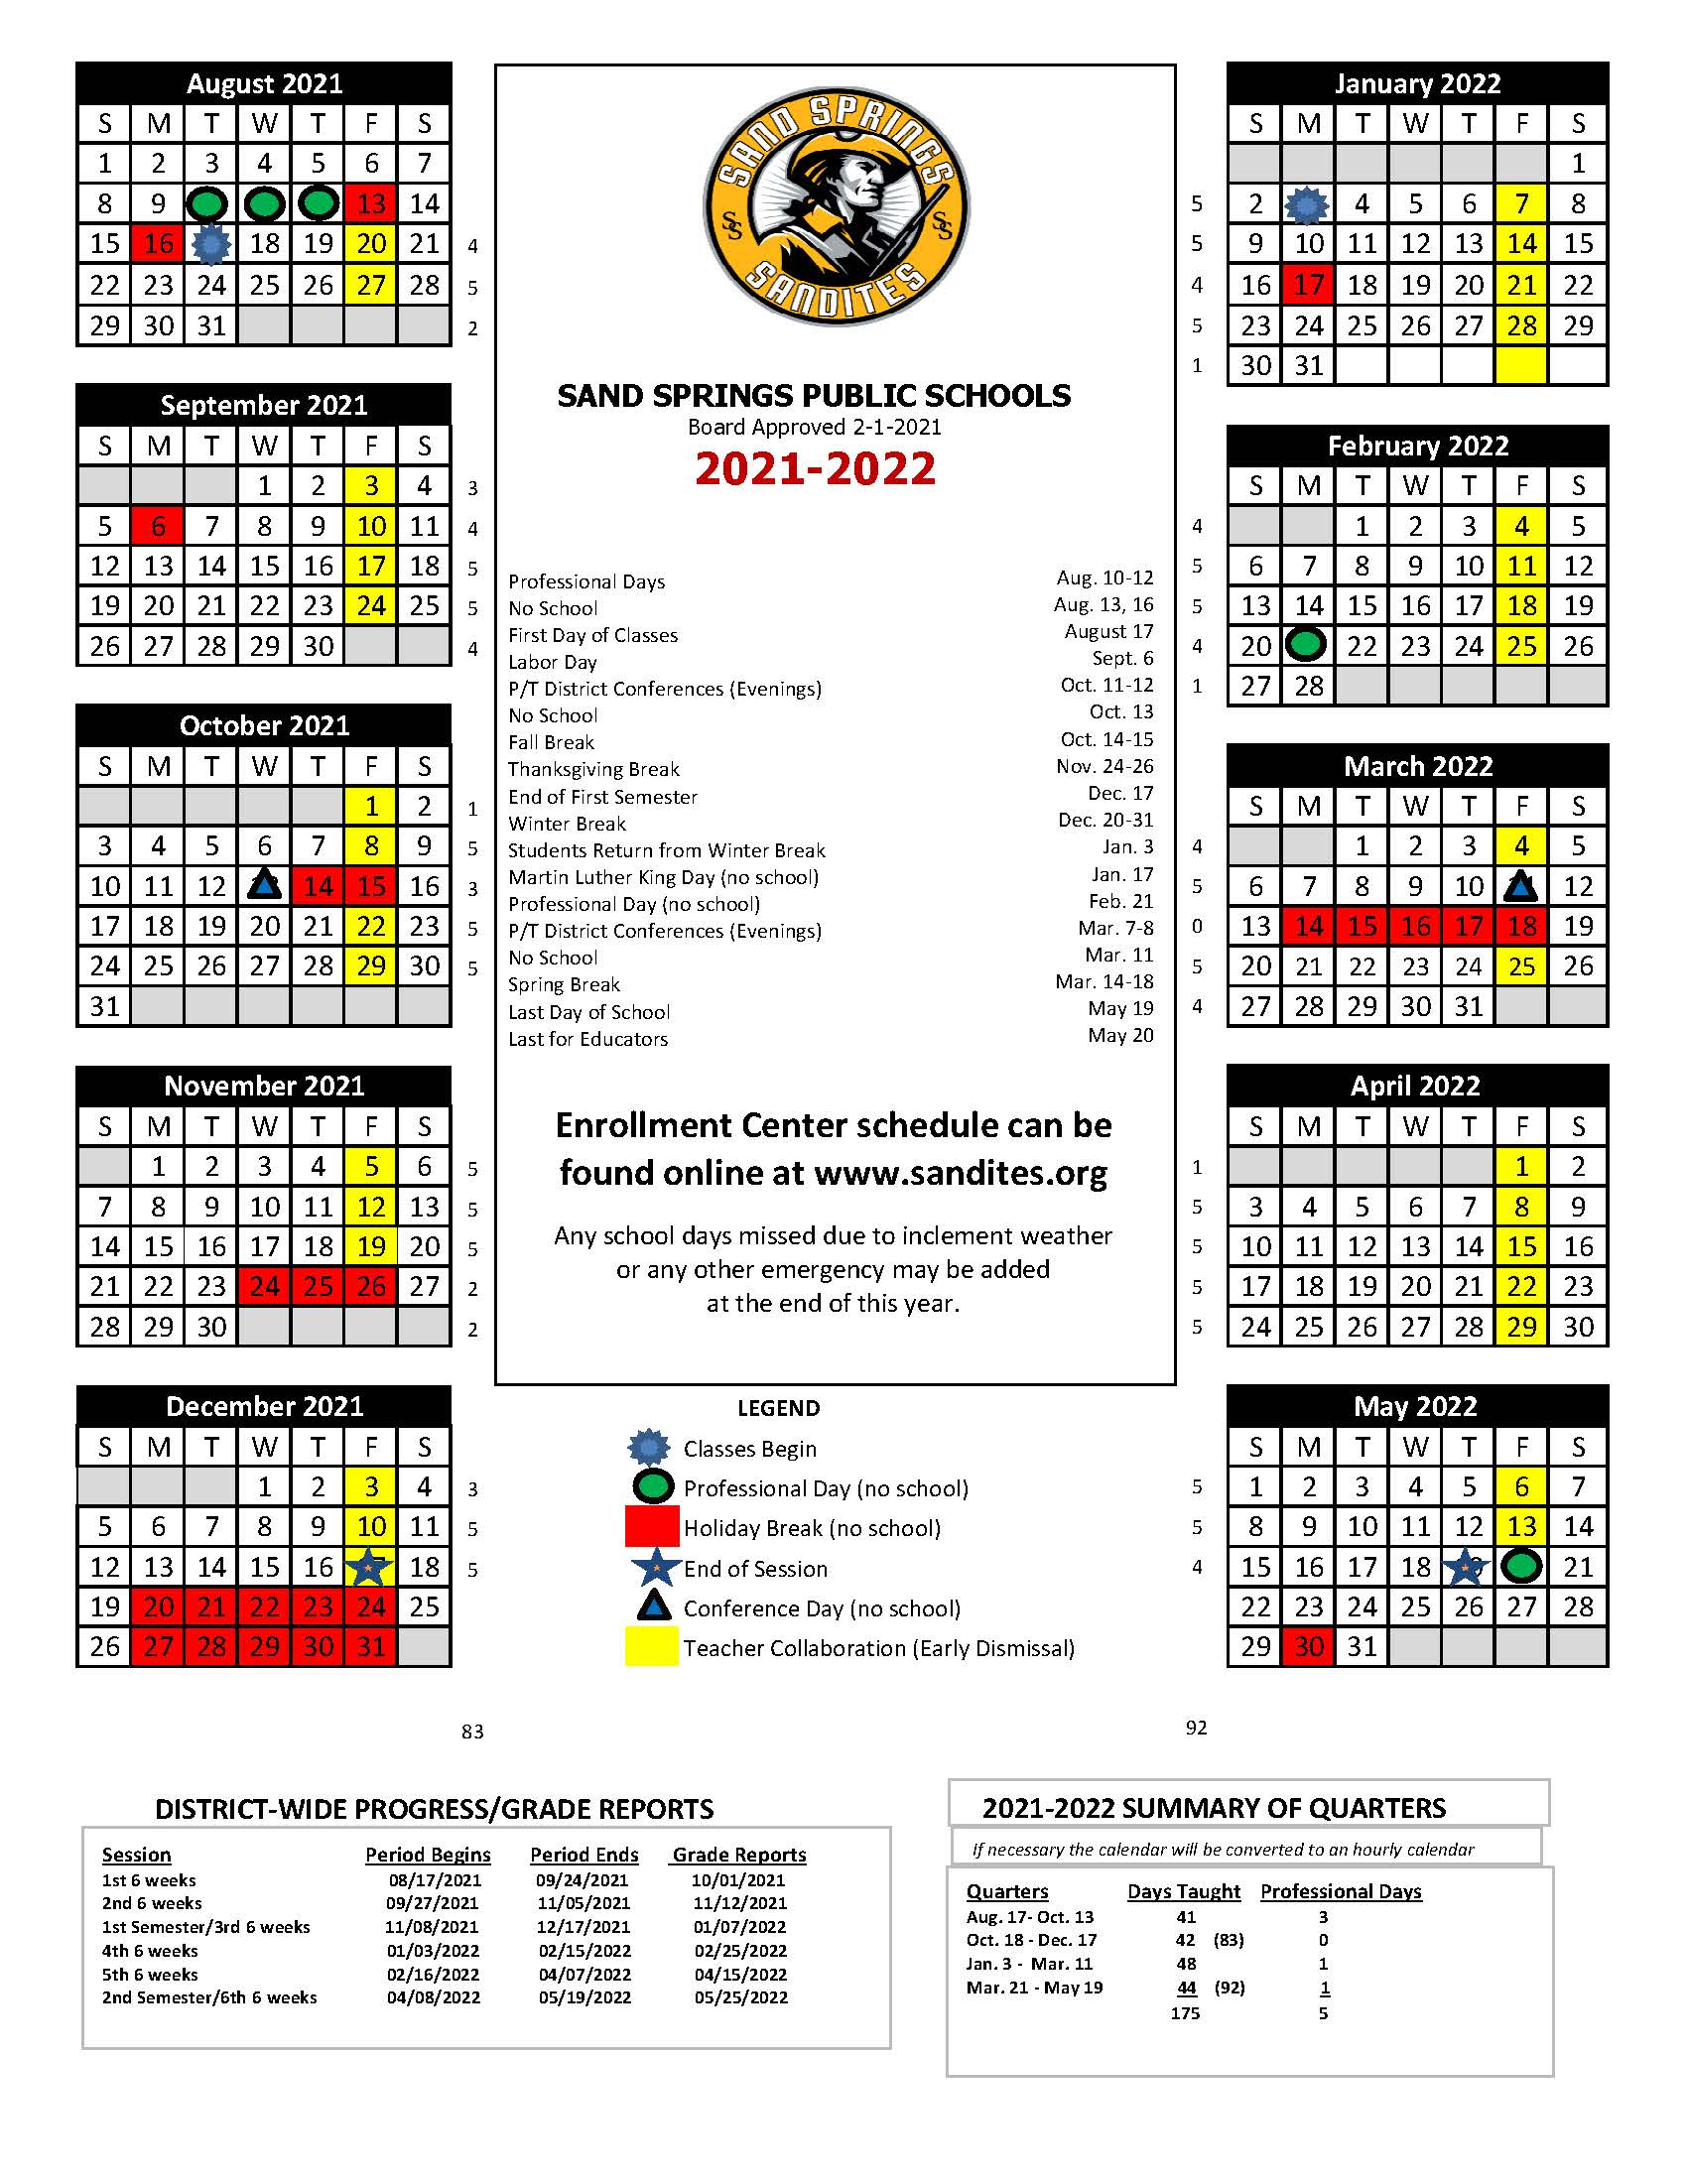 Approved School Calendars | Sand Springs Public Schools